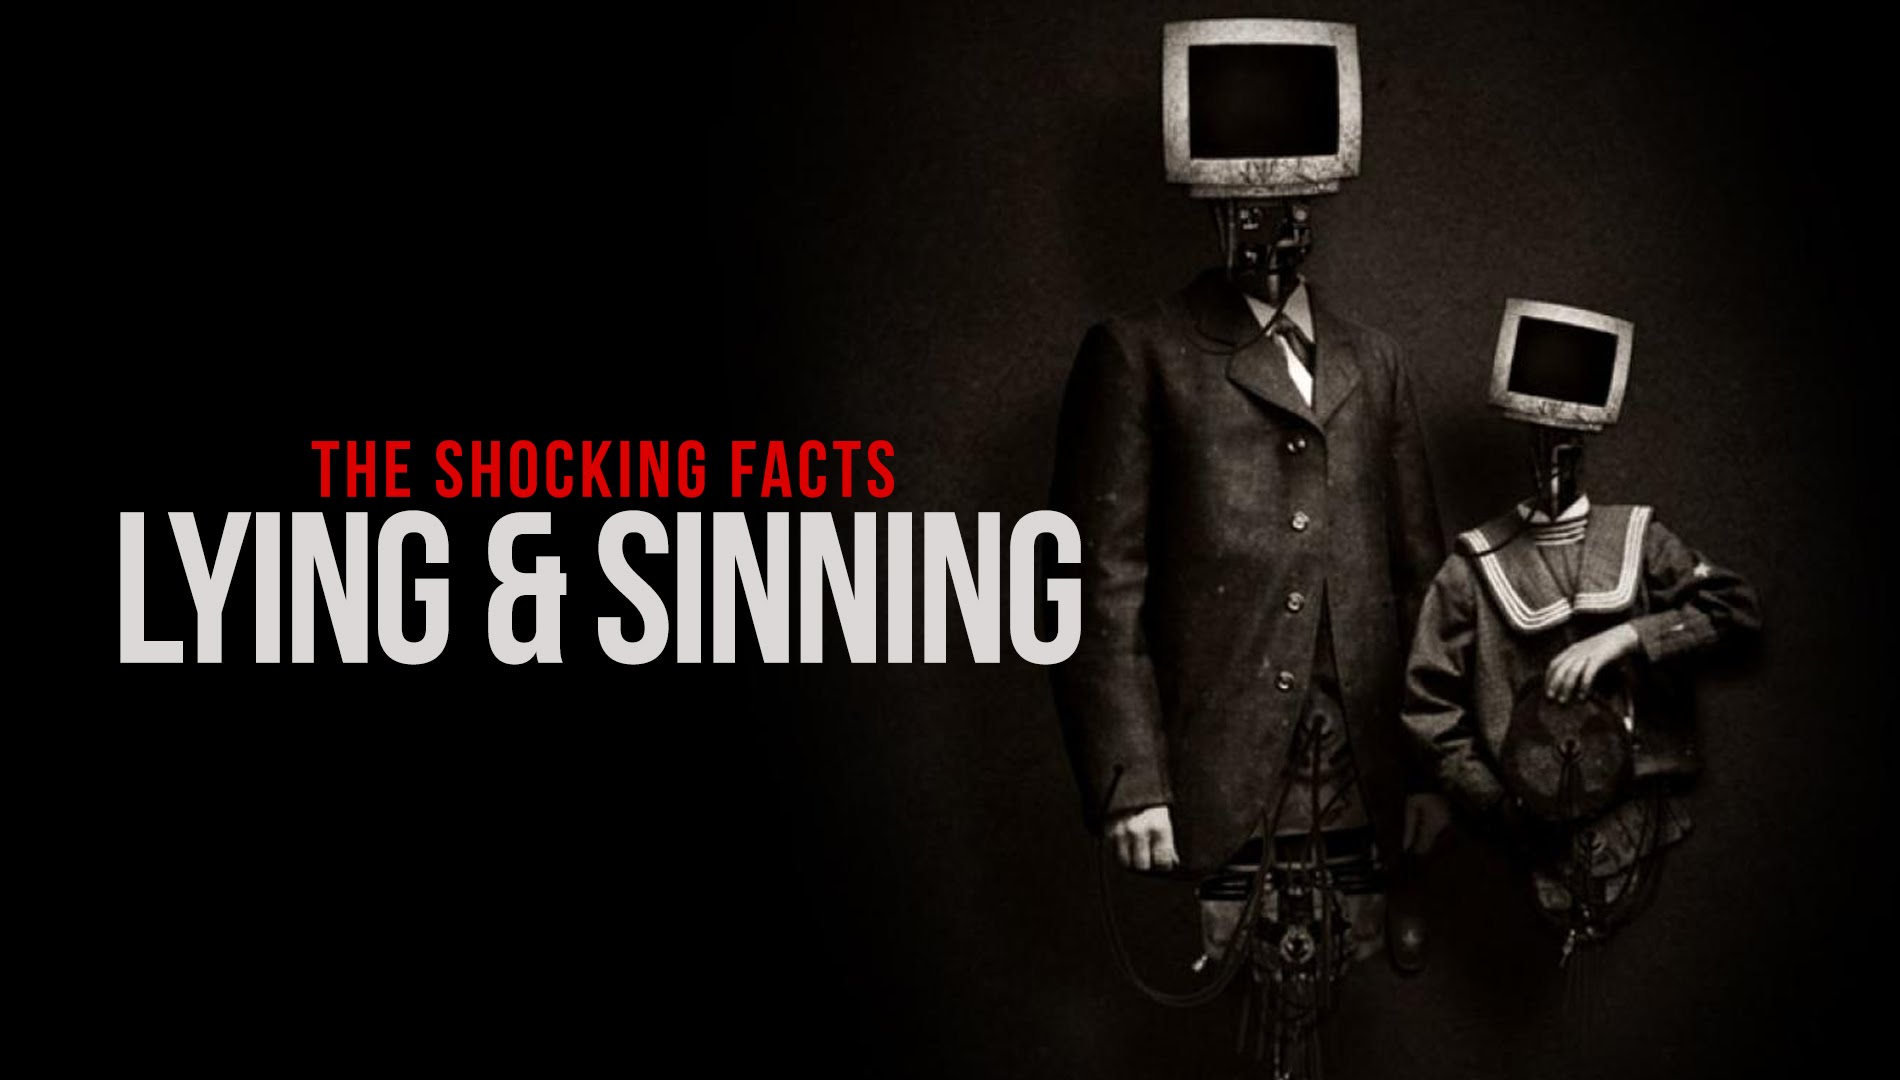 Lying & Sinning - The Shocking Facts